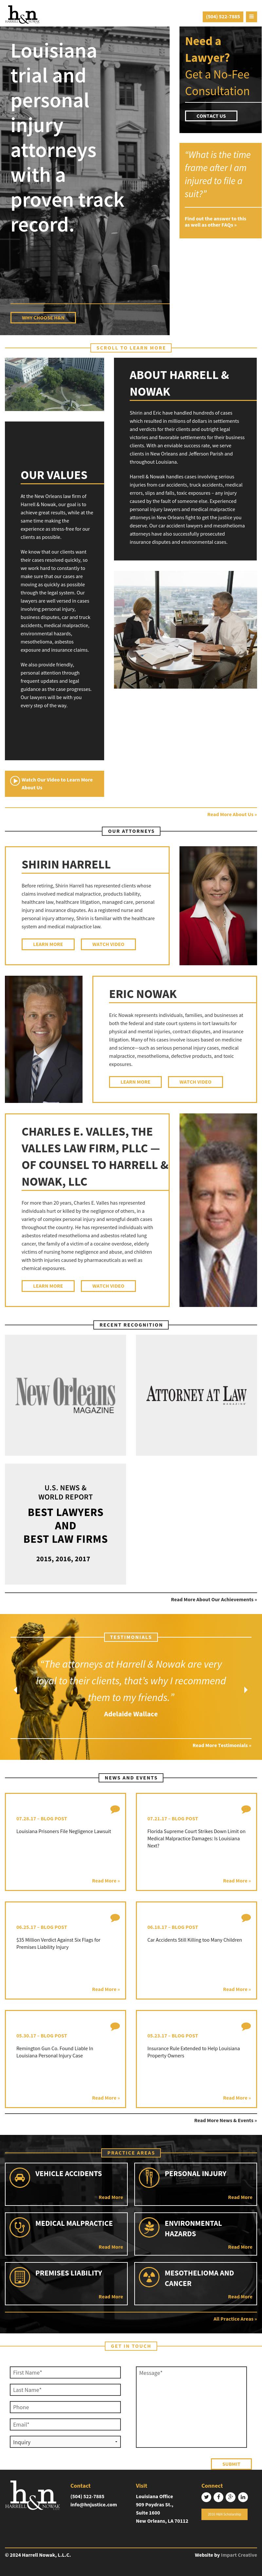 Harrell & Nowak, LLC - New Orleans LA Lawyers